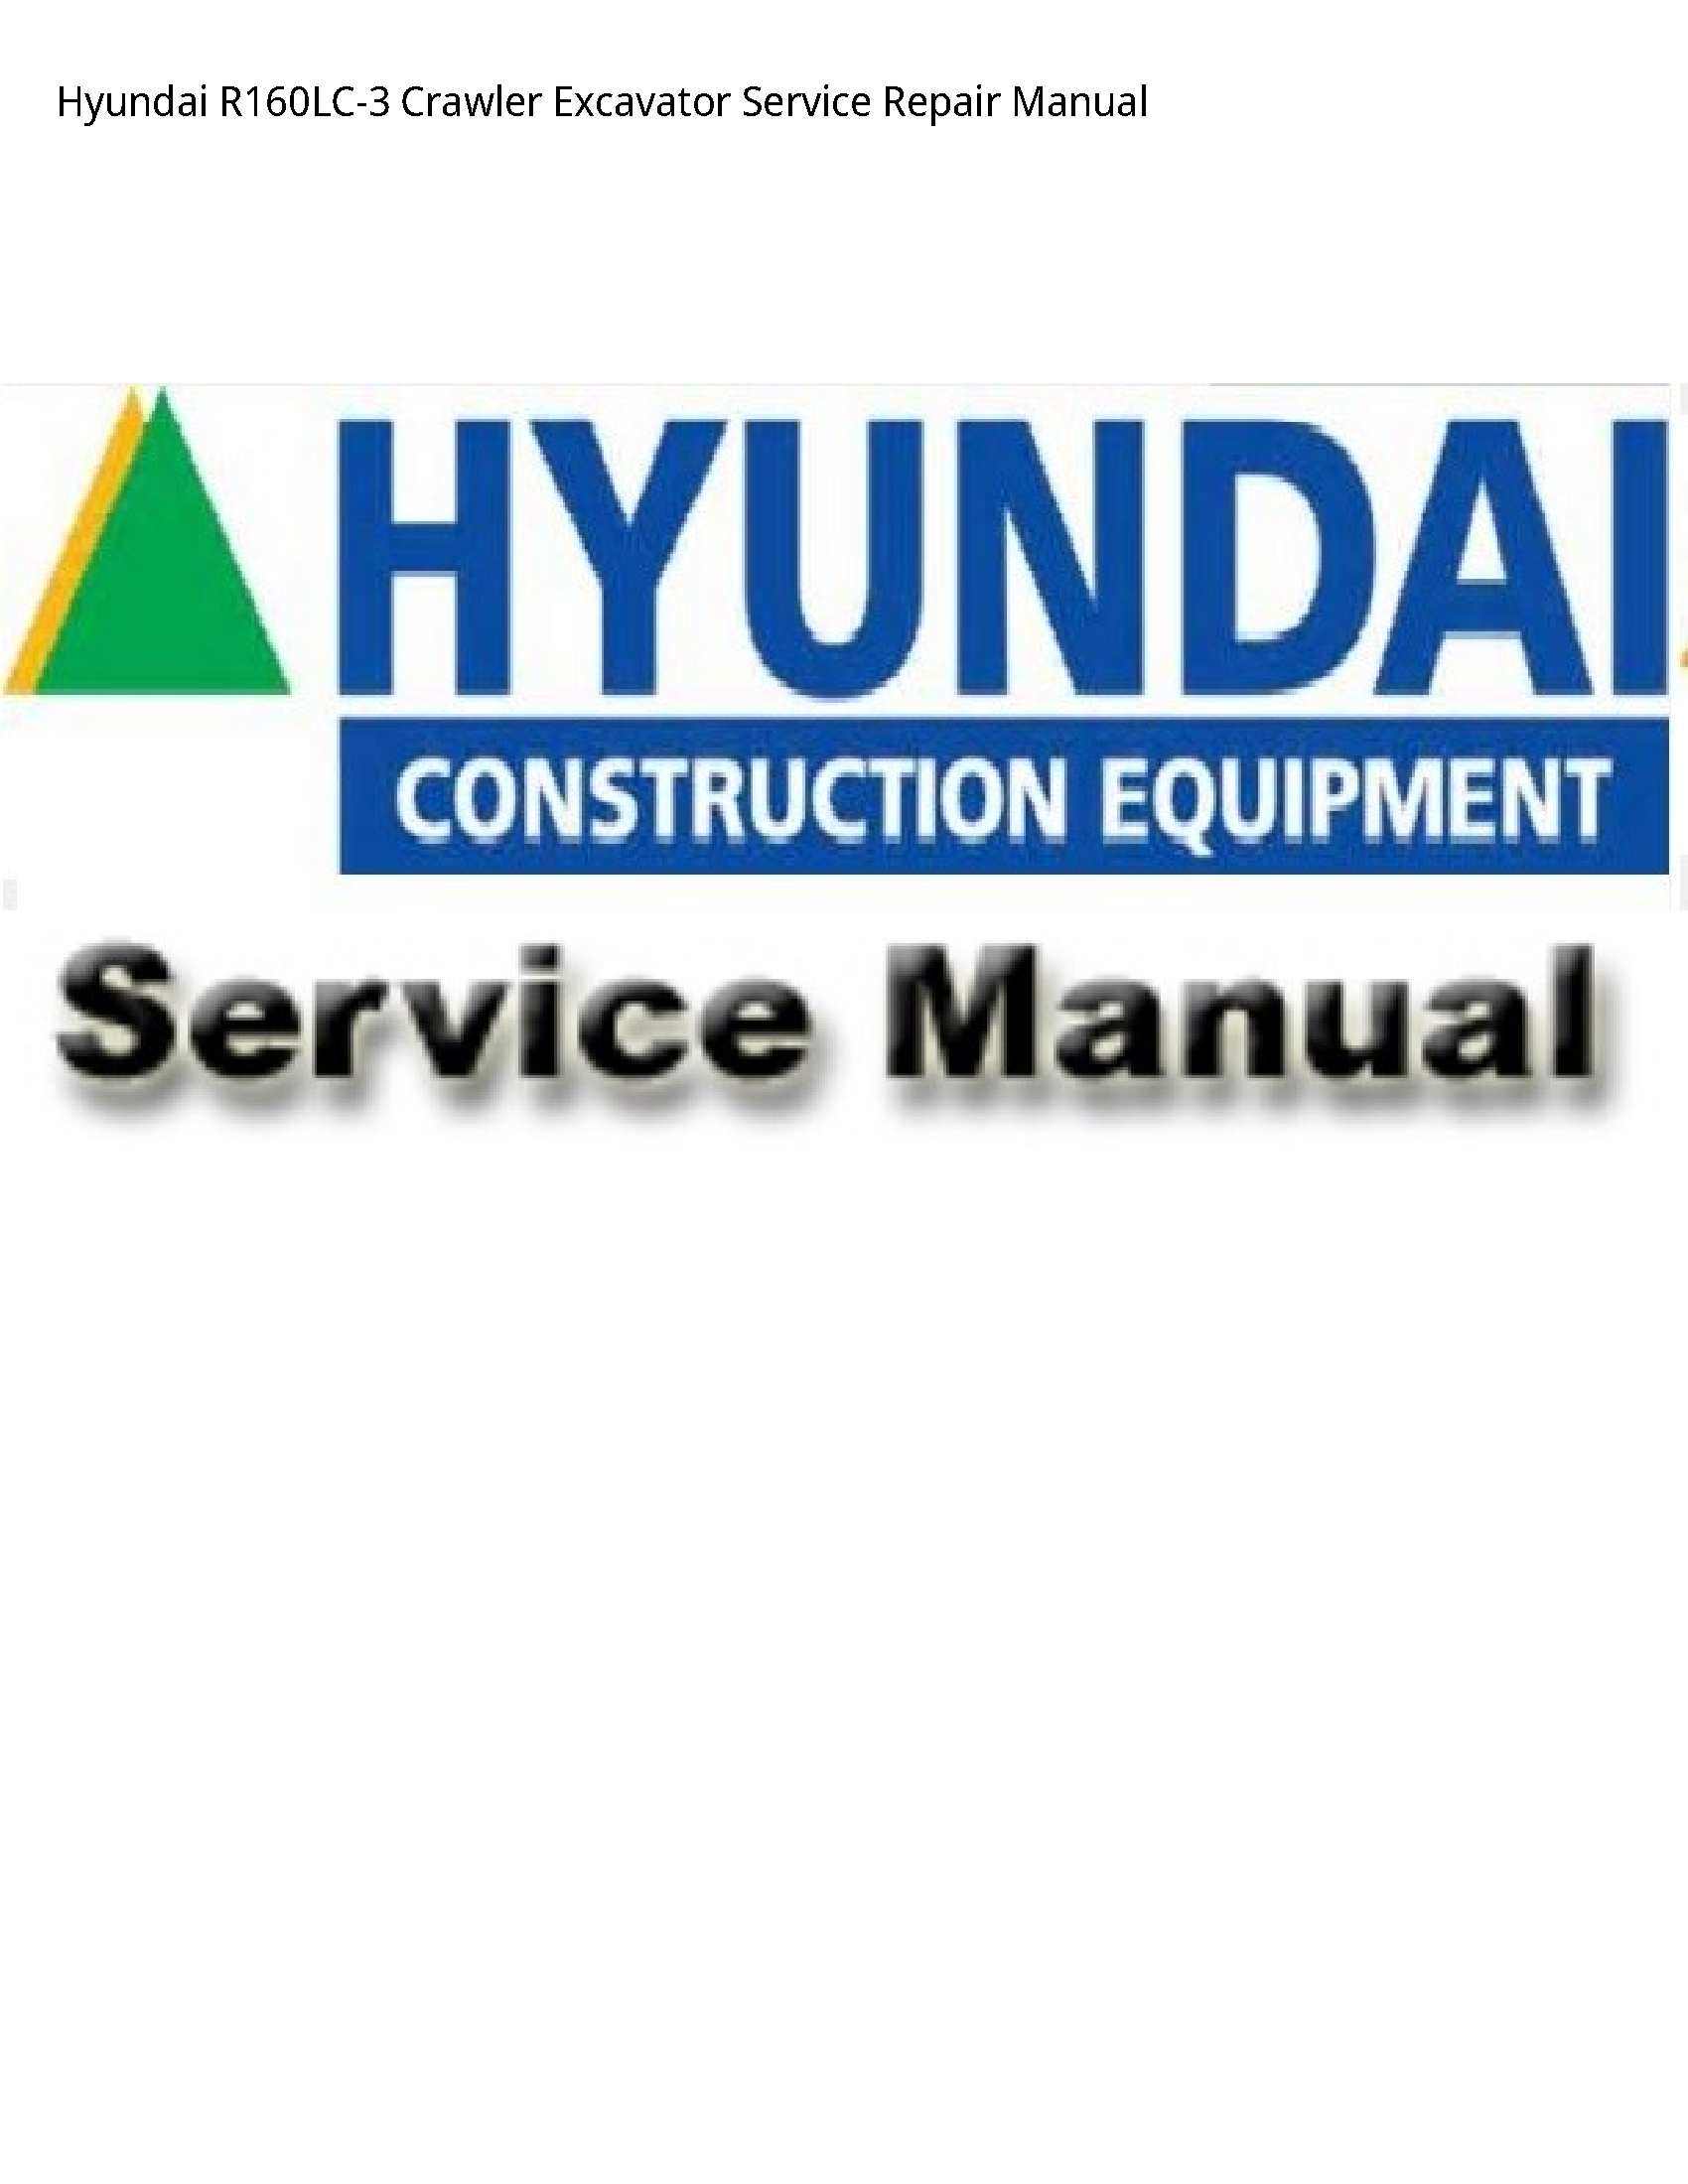 Hyundai R160LC-3 Crawler Excavator manual